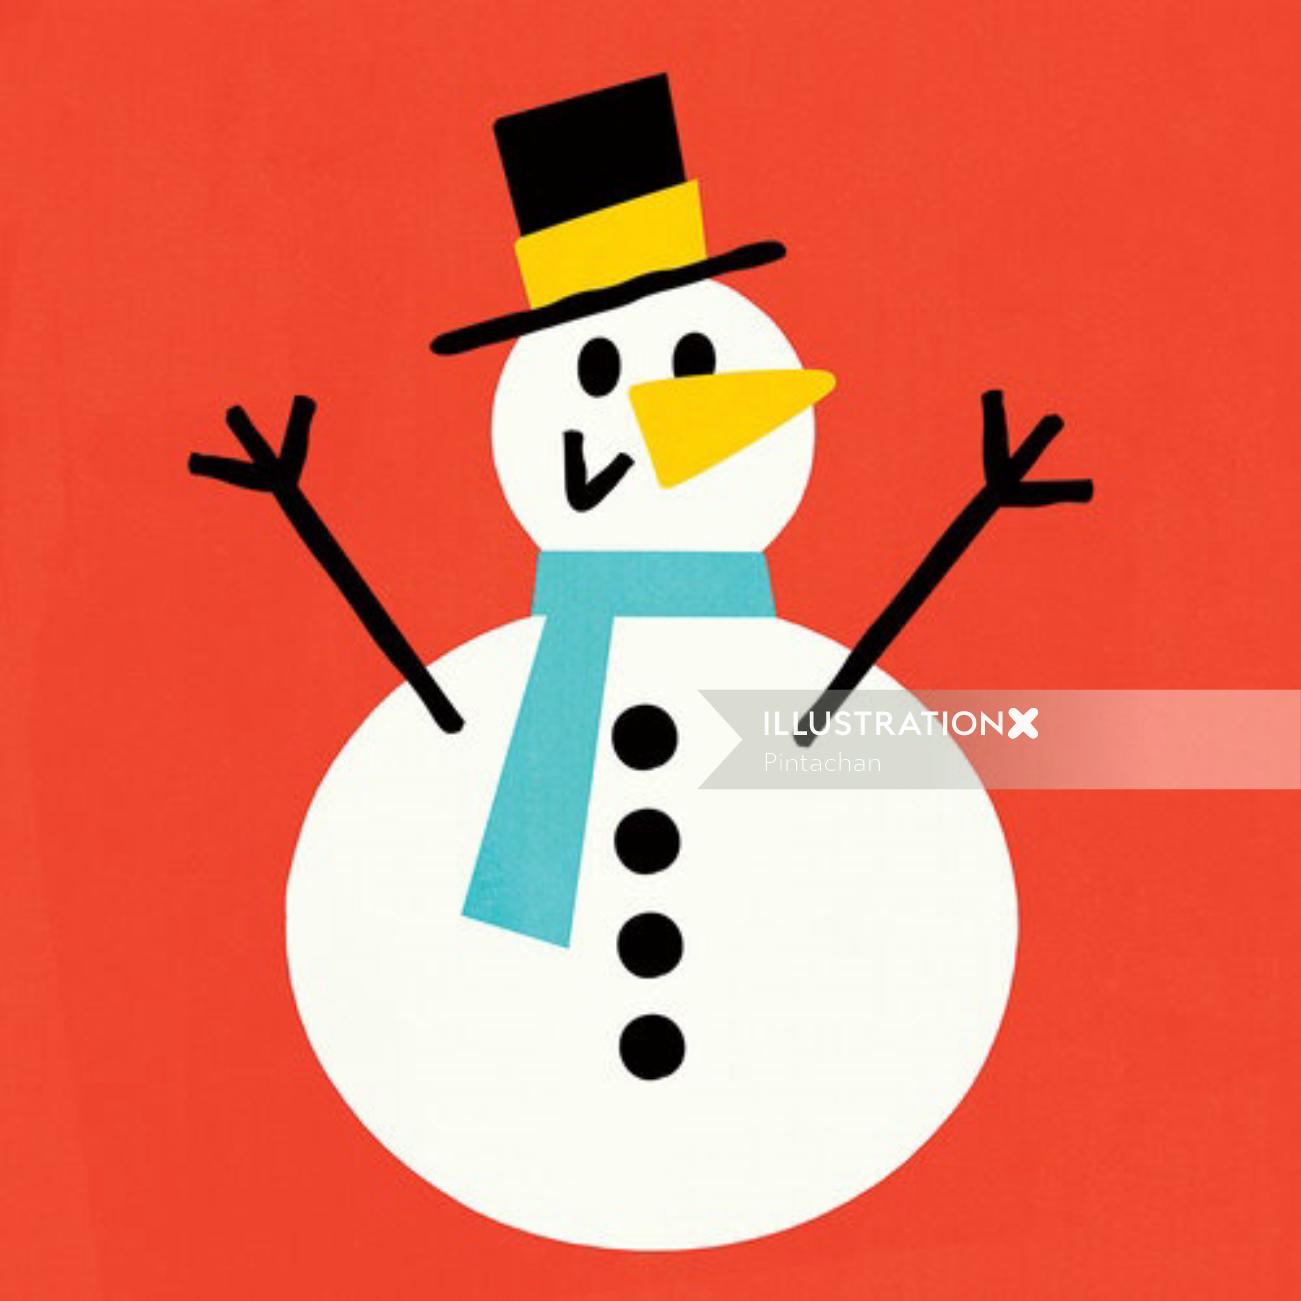 Happy Snowman Digital art